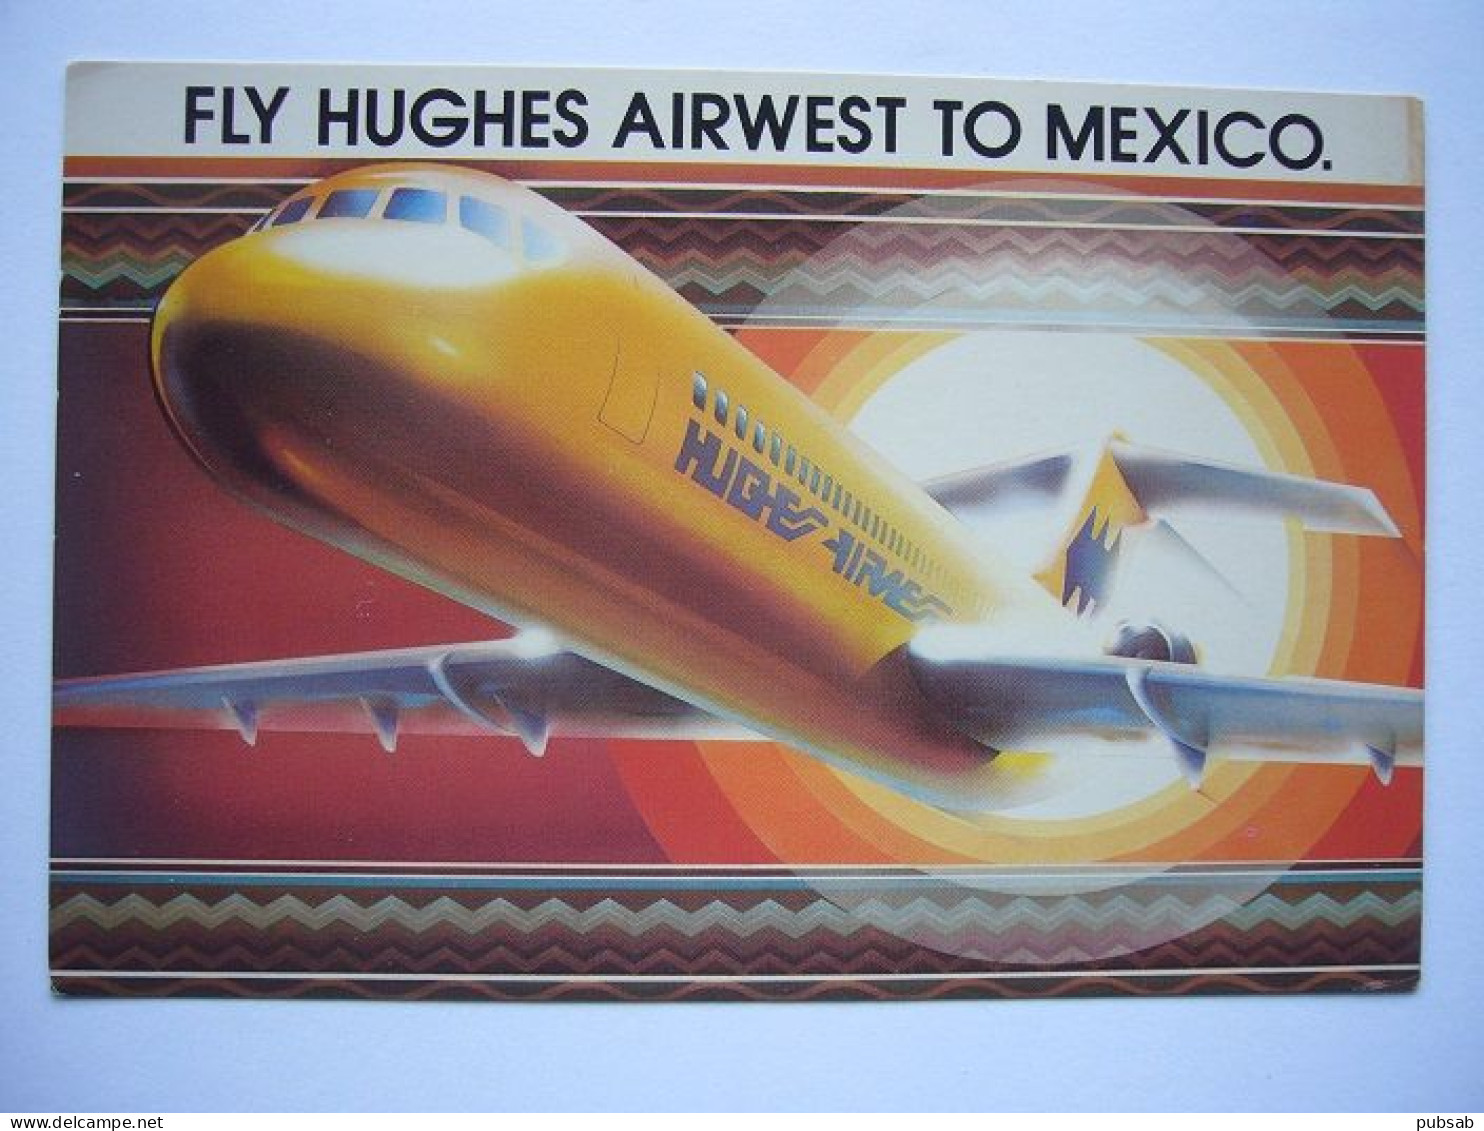 Avion / Airplane / HUGHES AIRWEST / Douglas DC 9-31 / Airline Issue - 1946-....: Ere Moderne